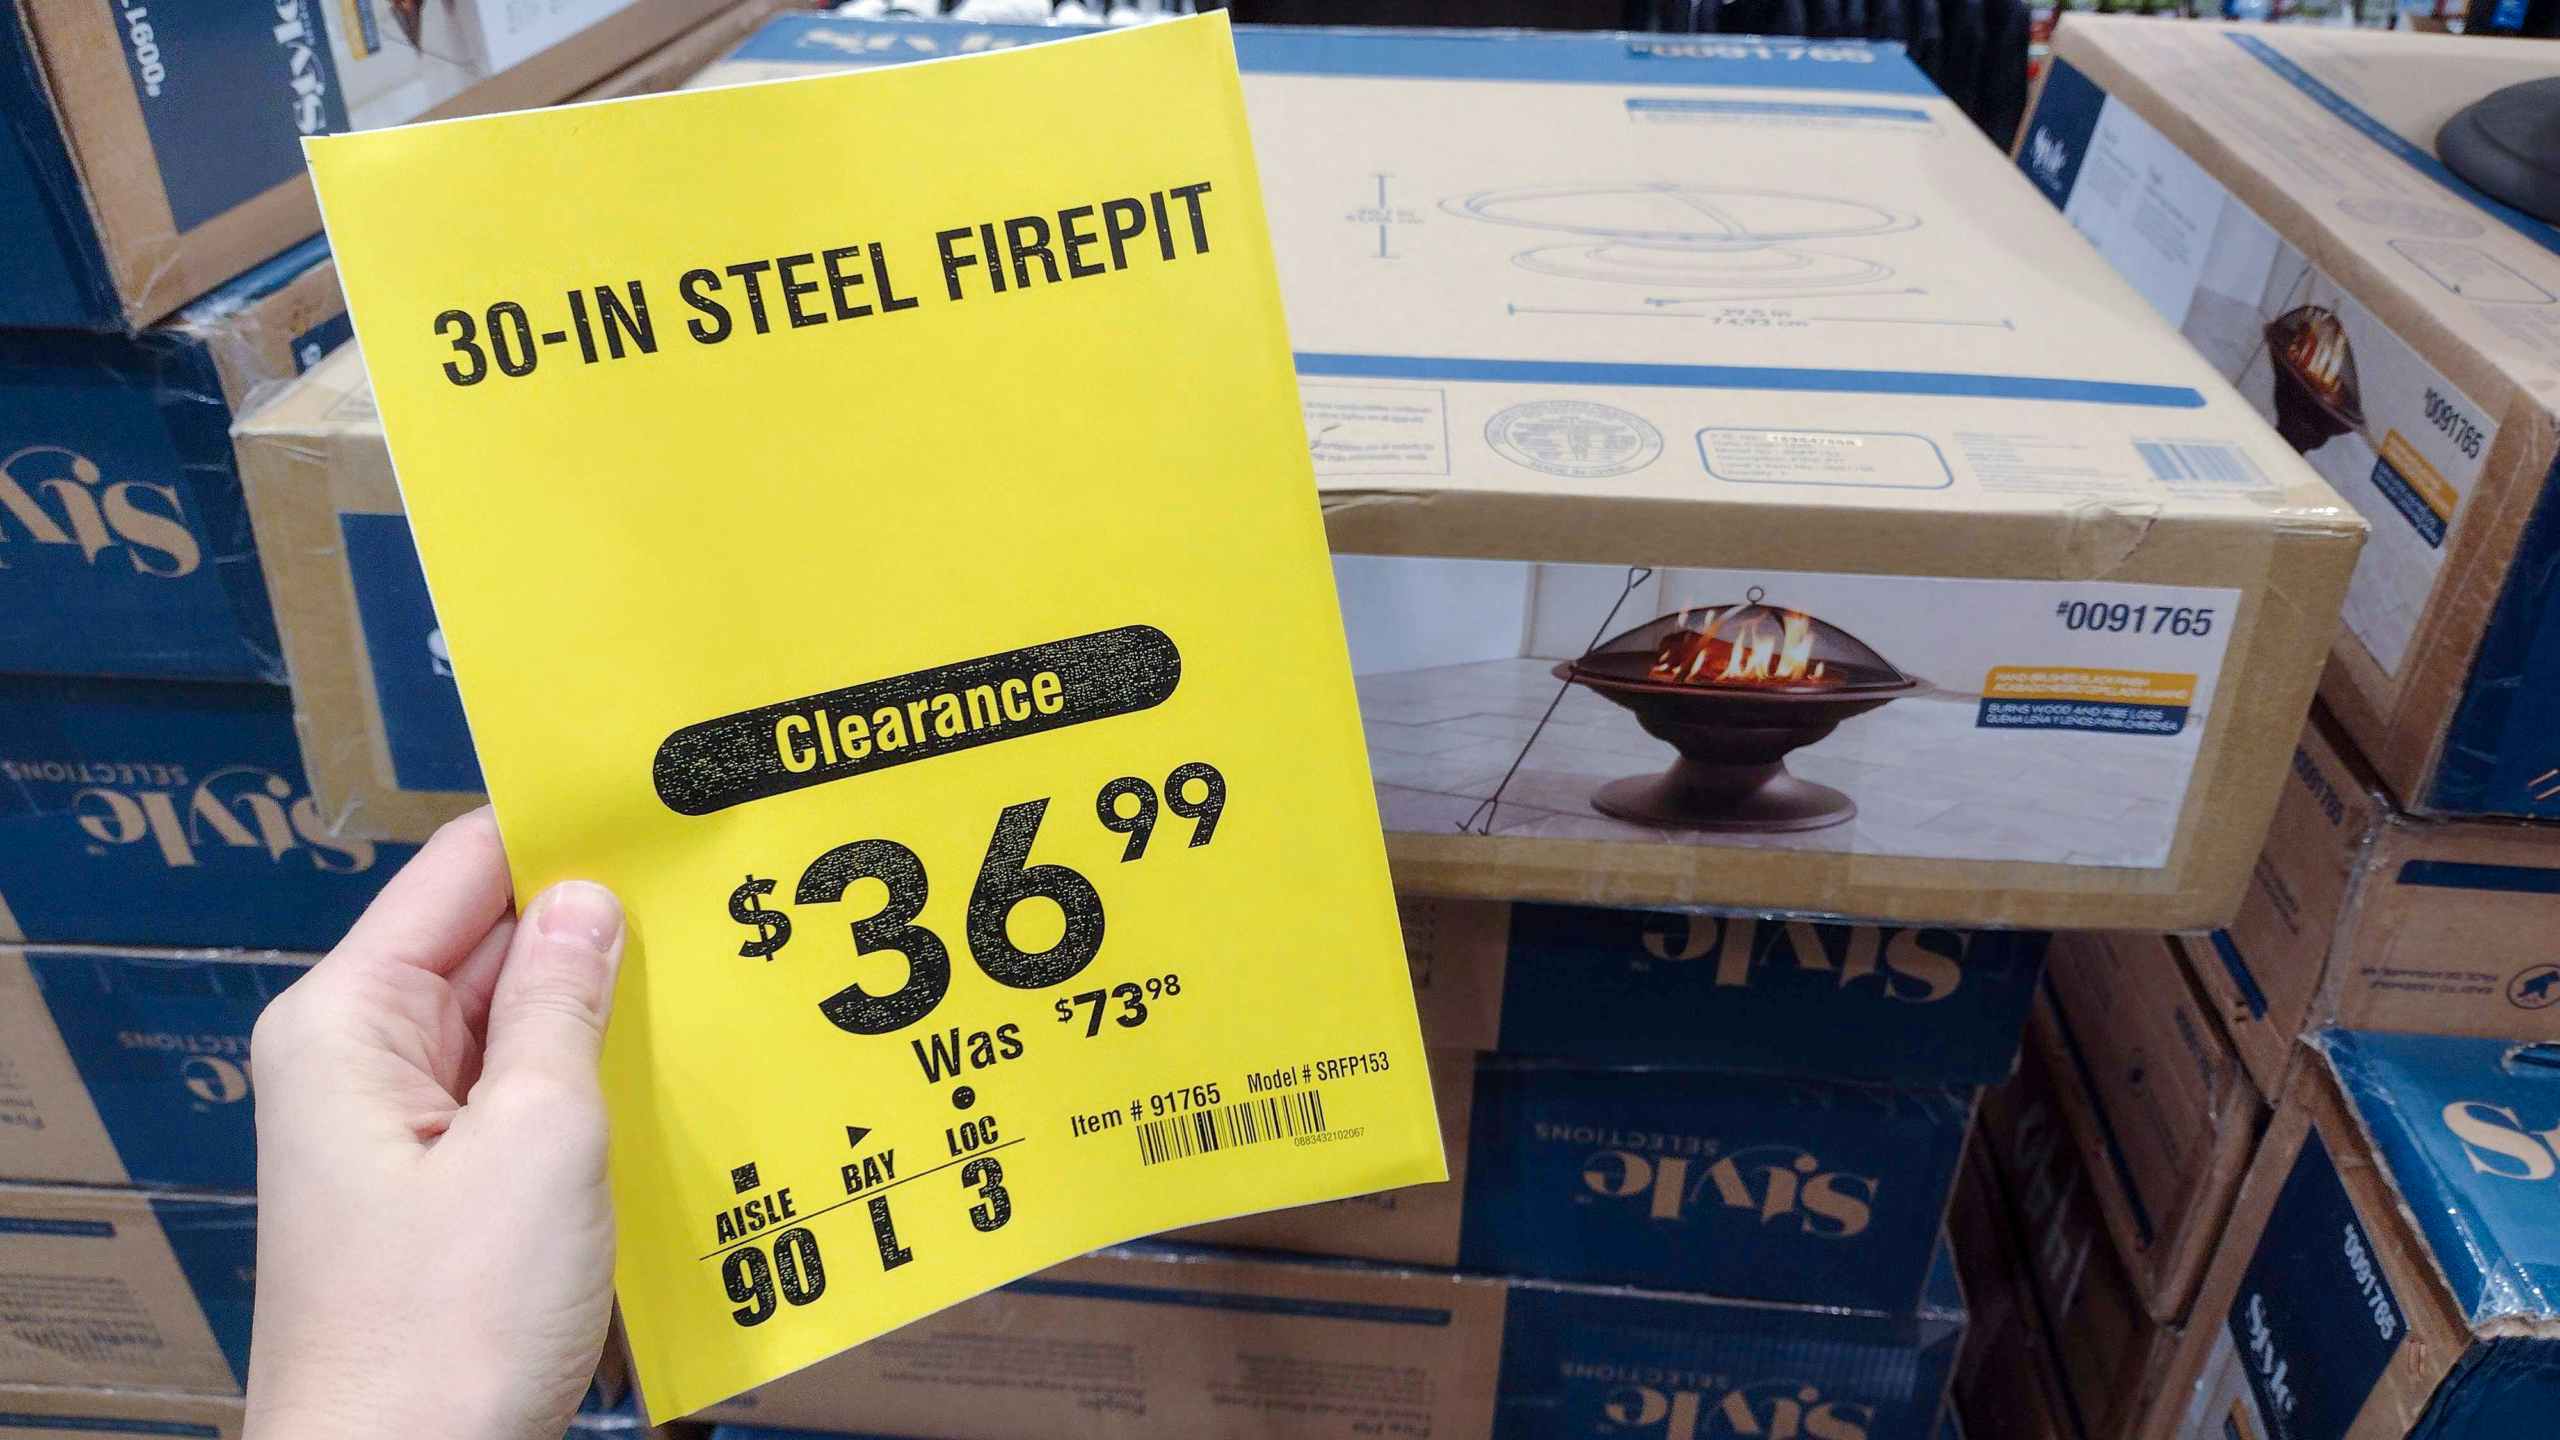 lowes year end clearance steel firepit on shelf